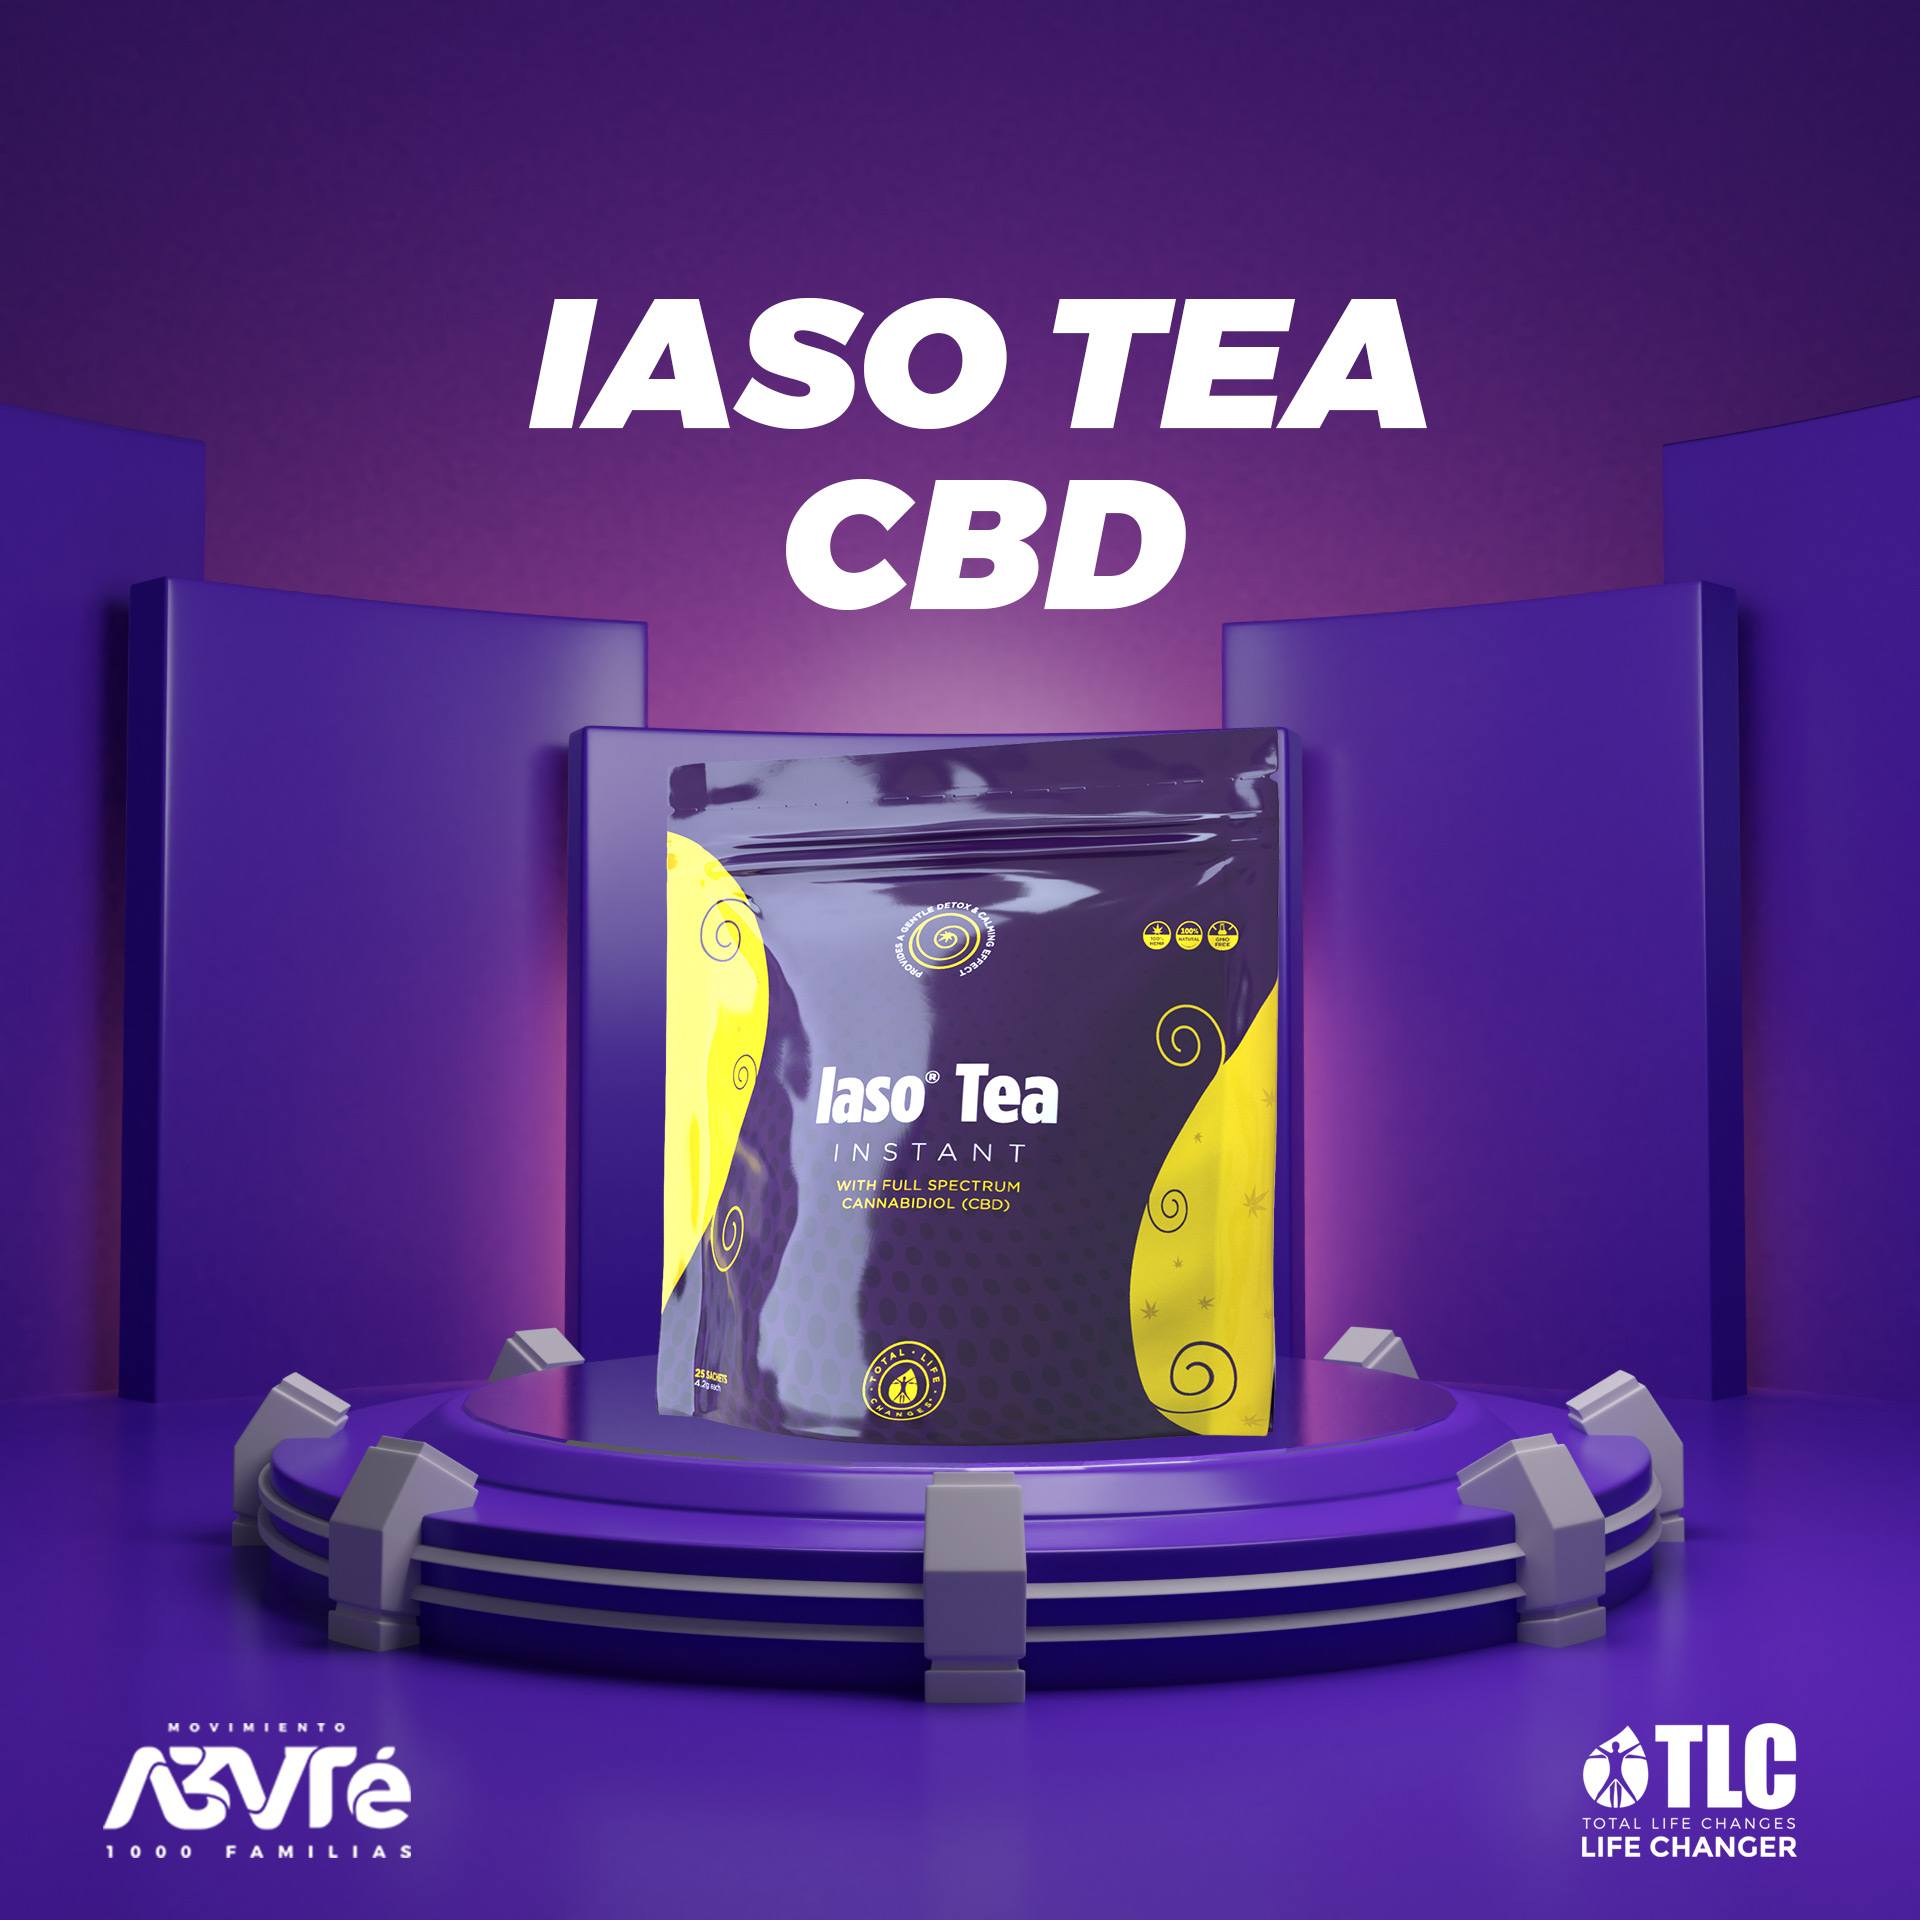 Iaso Tea Instant CBD